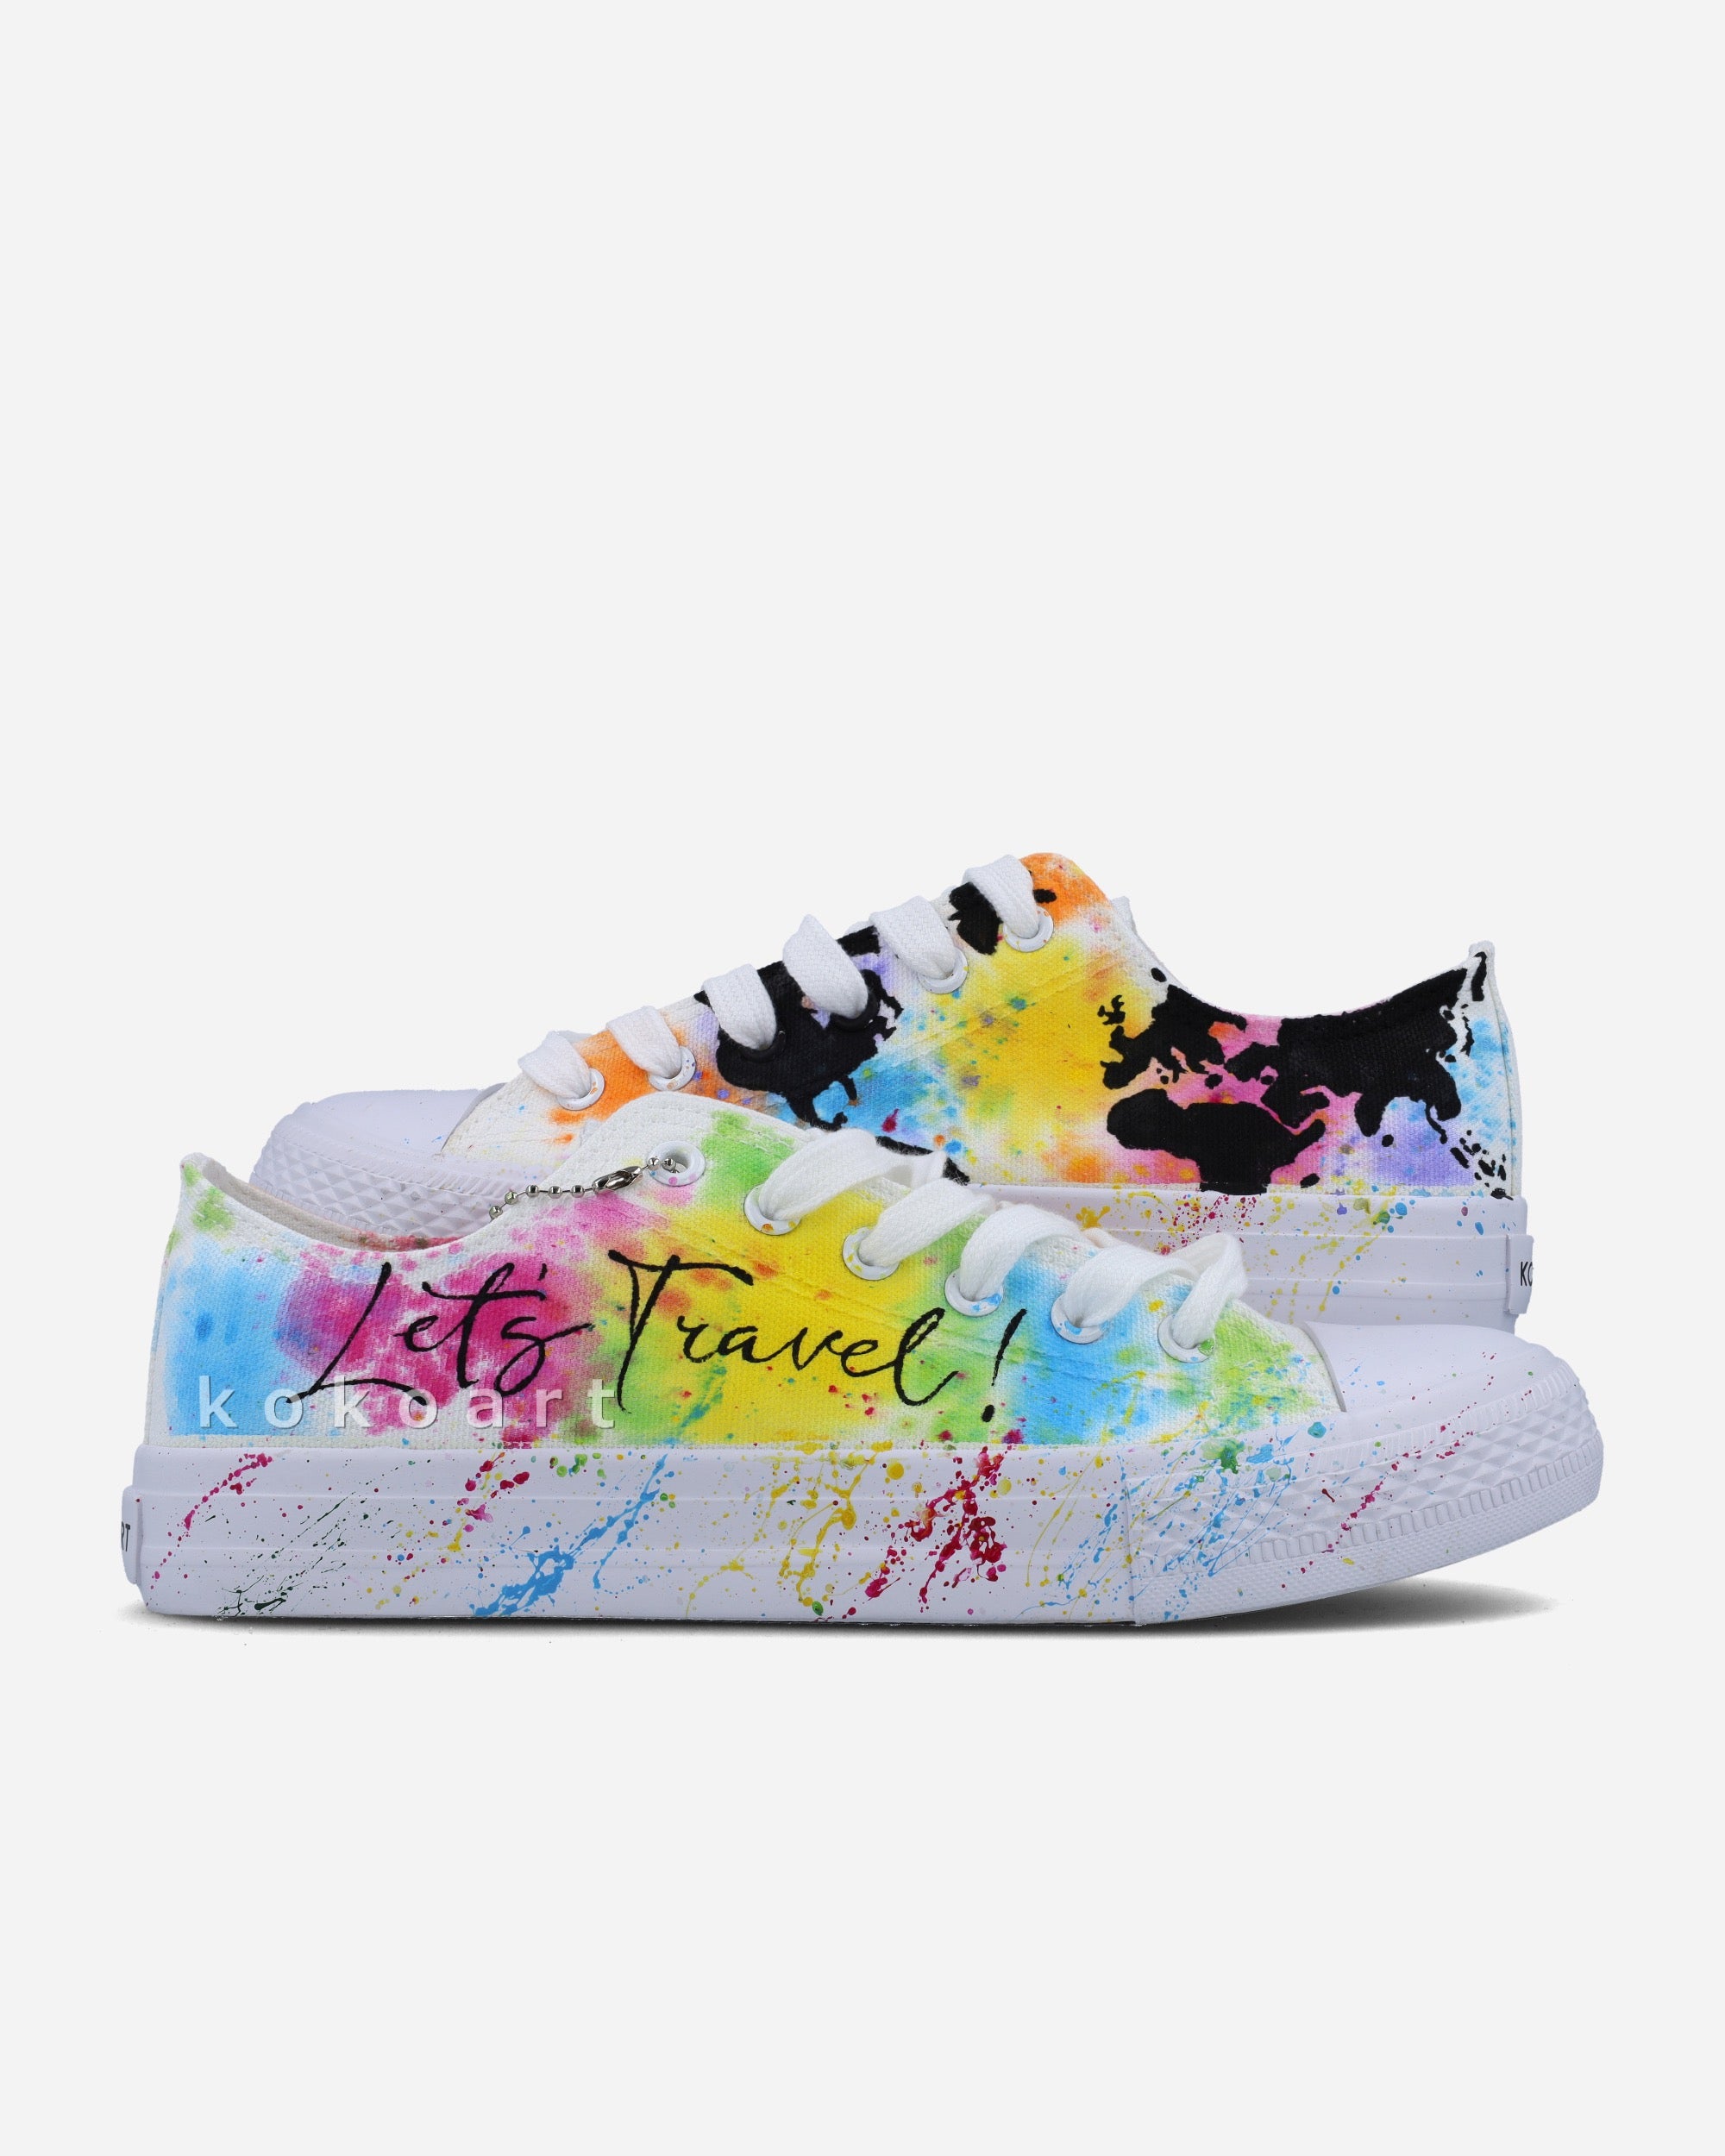 Let's Travel Multicolour Splatters Hand Painted Shoes